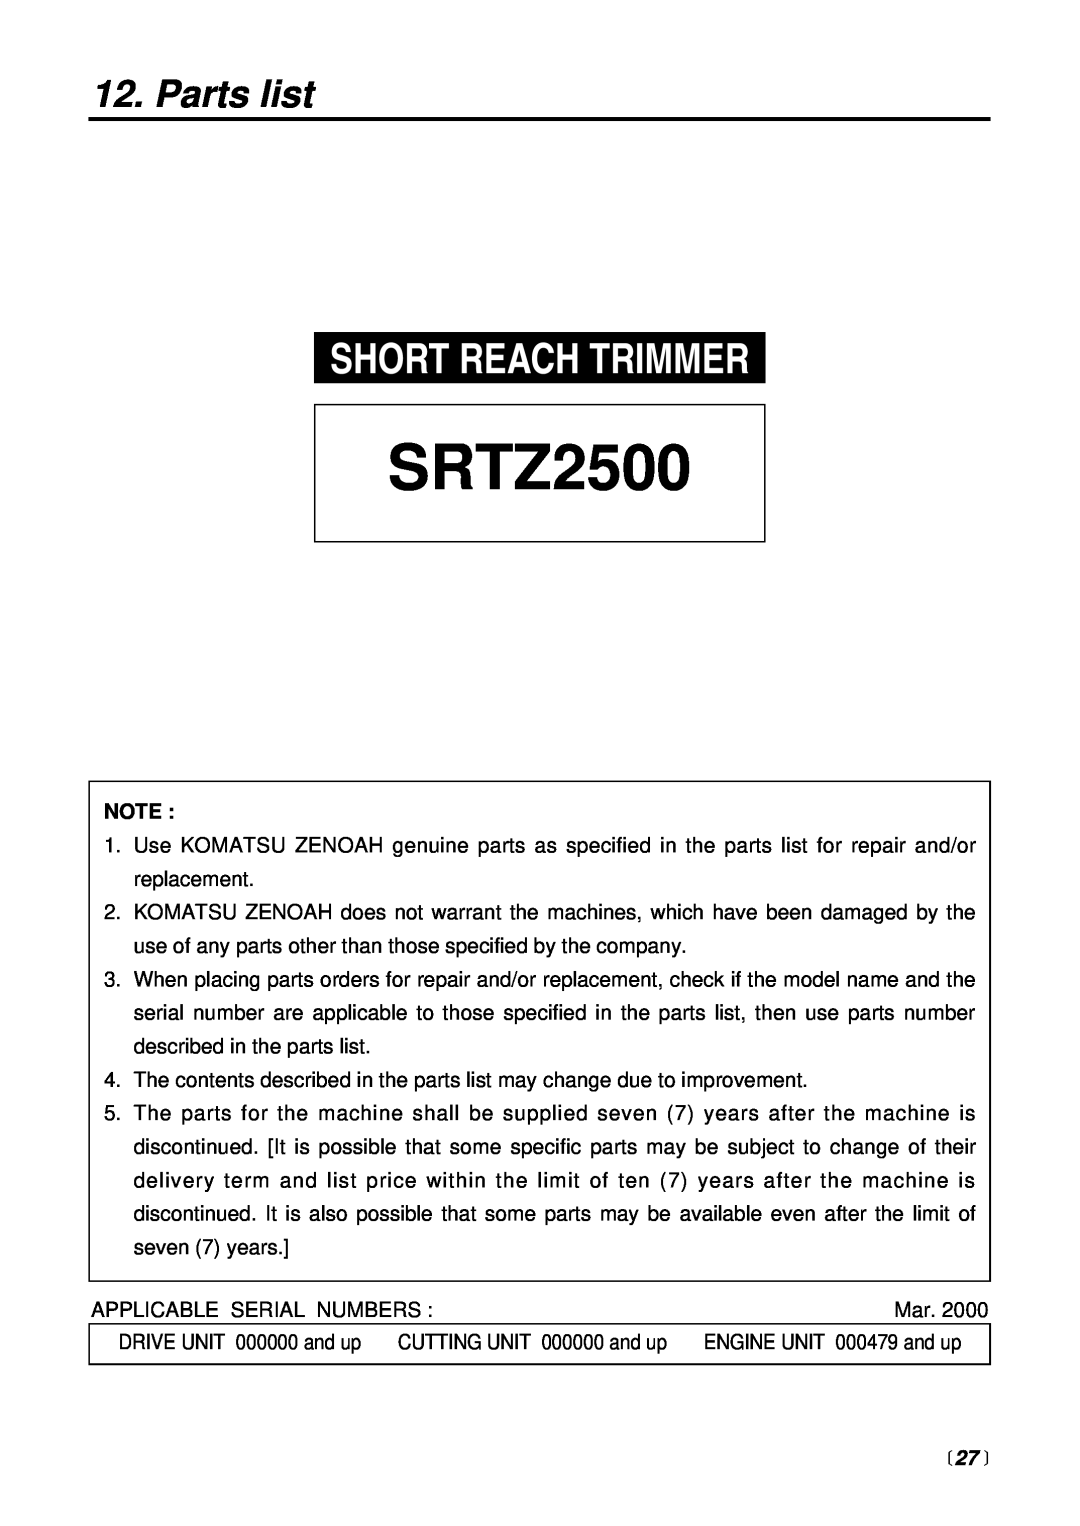 RedMax SRTZ2500 manual Parts list, Short Reach Trimmer,  27  